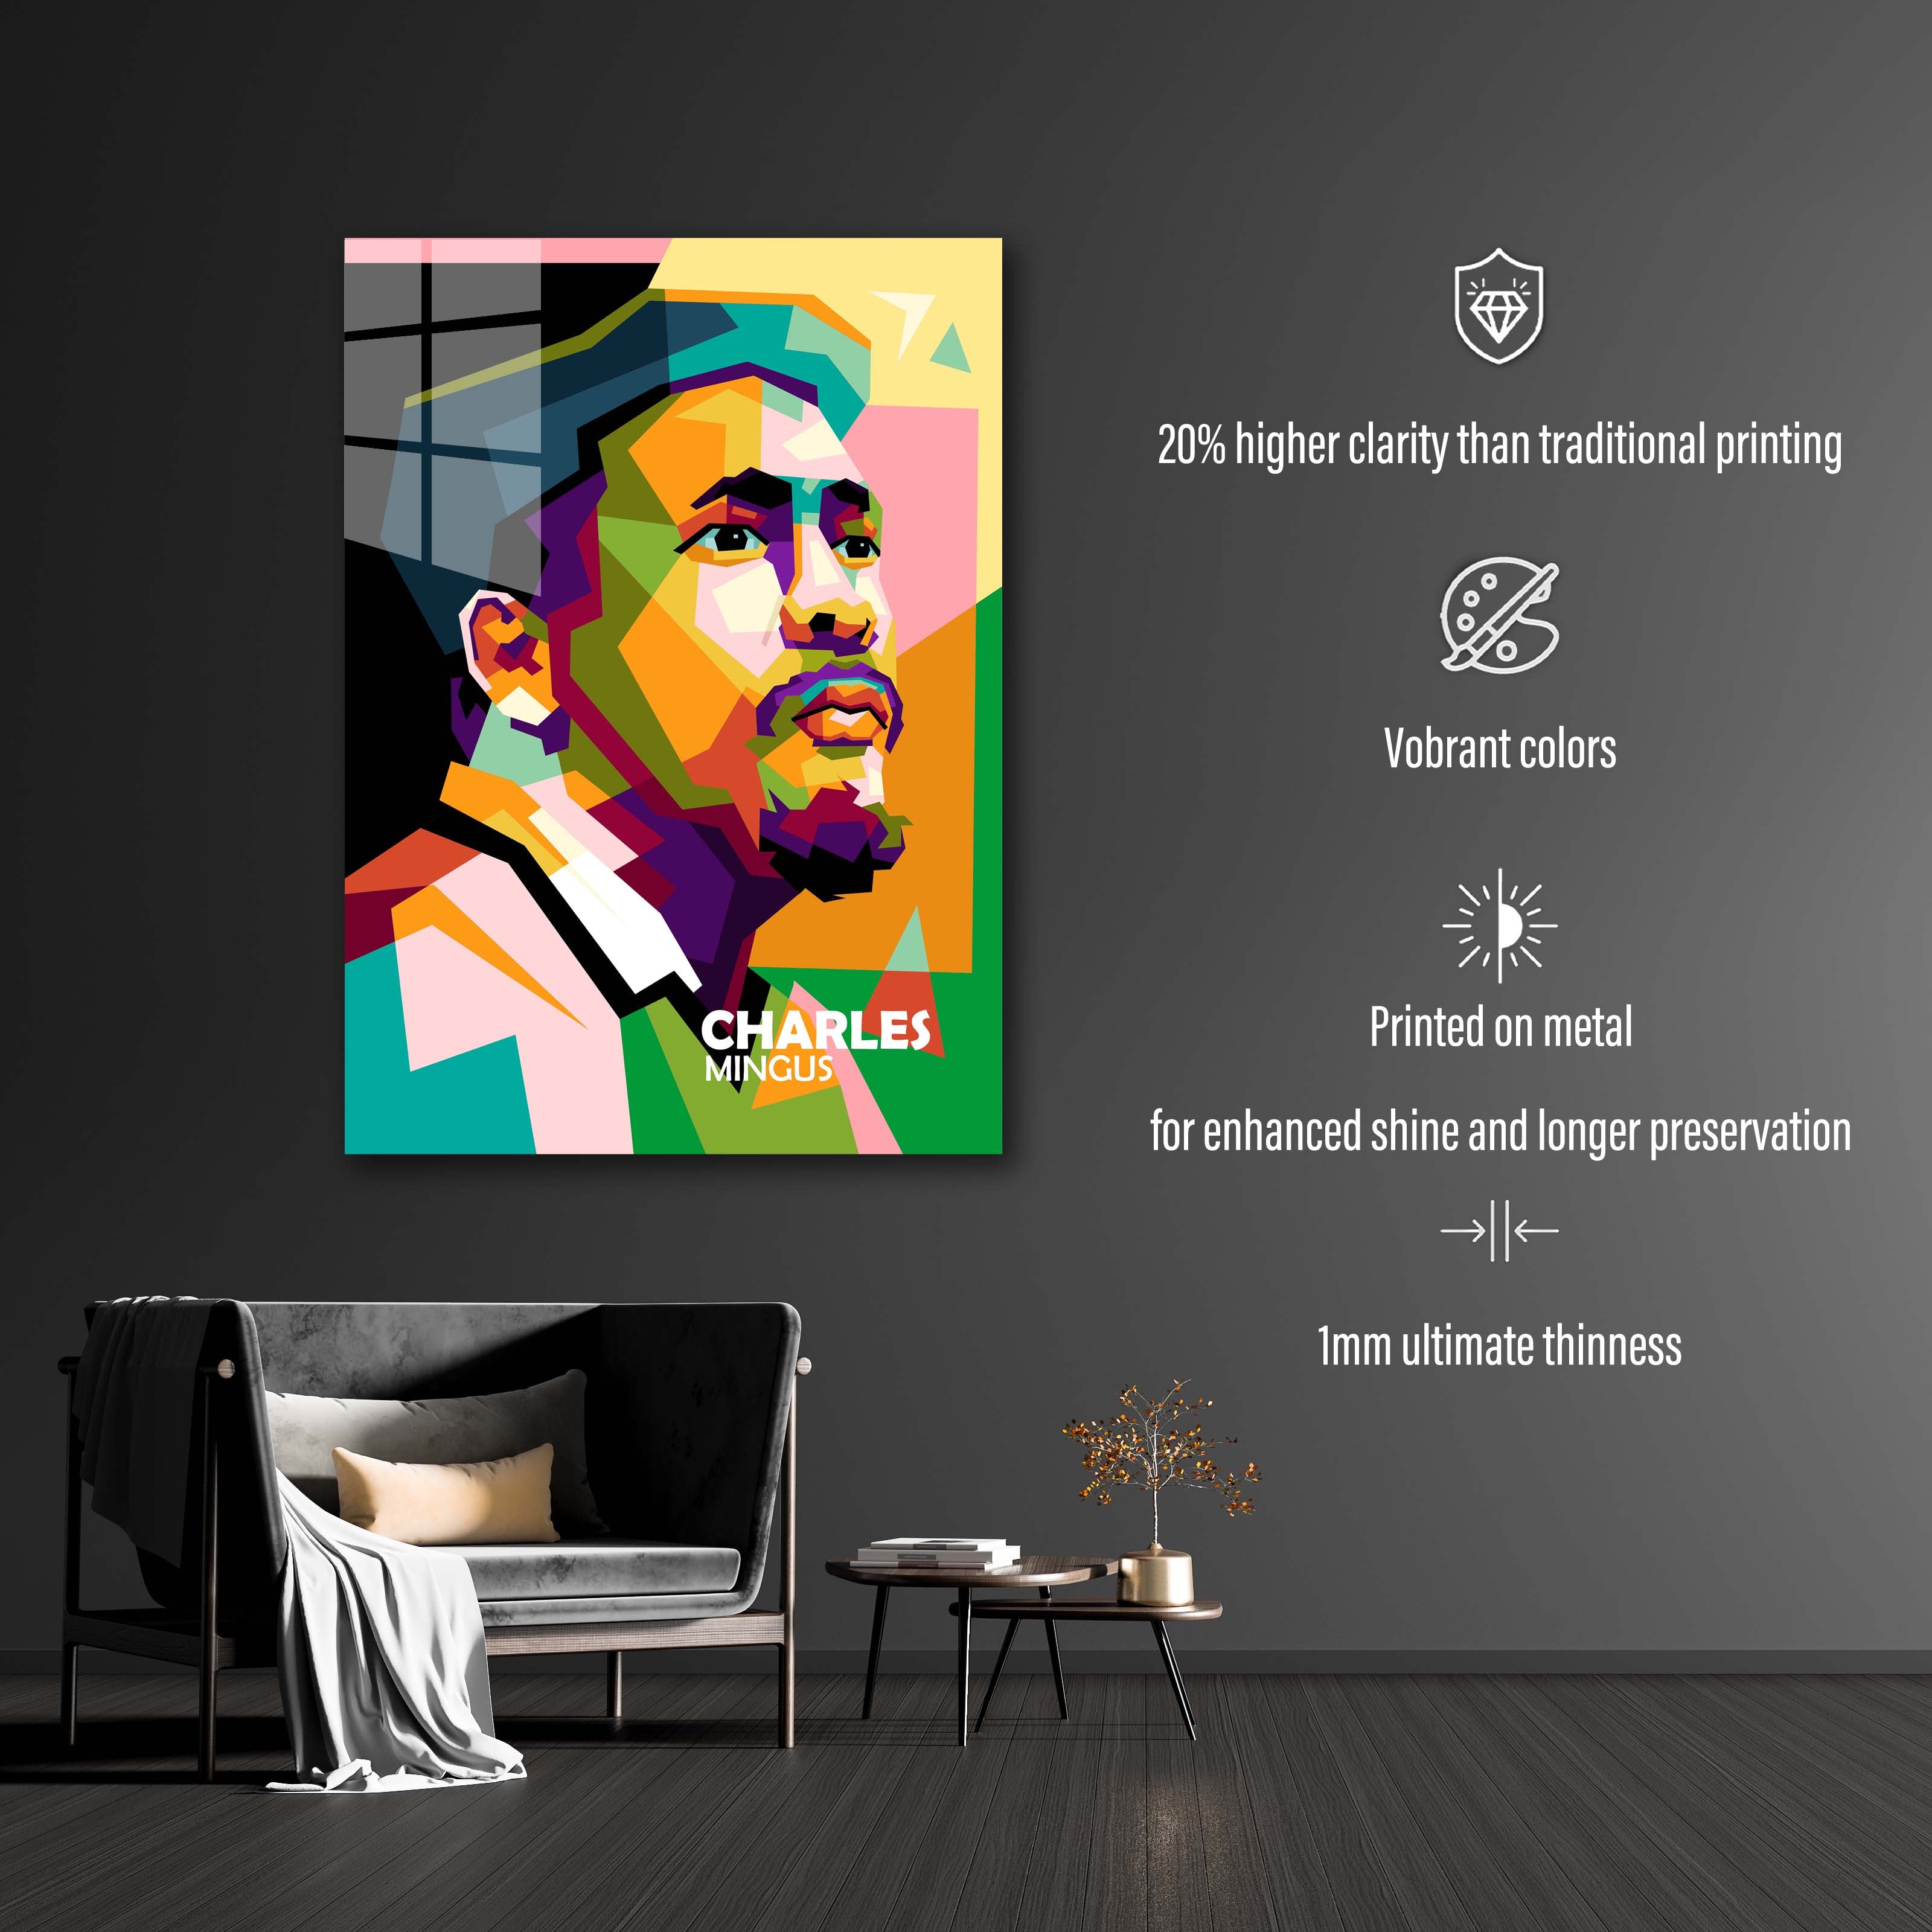 Chales Mingus in top selling art-designed by @Amirudin kosong enam